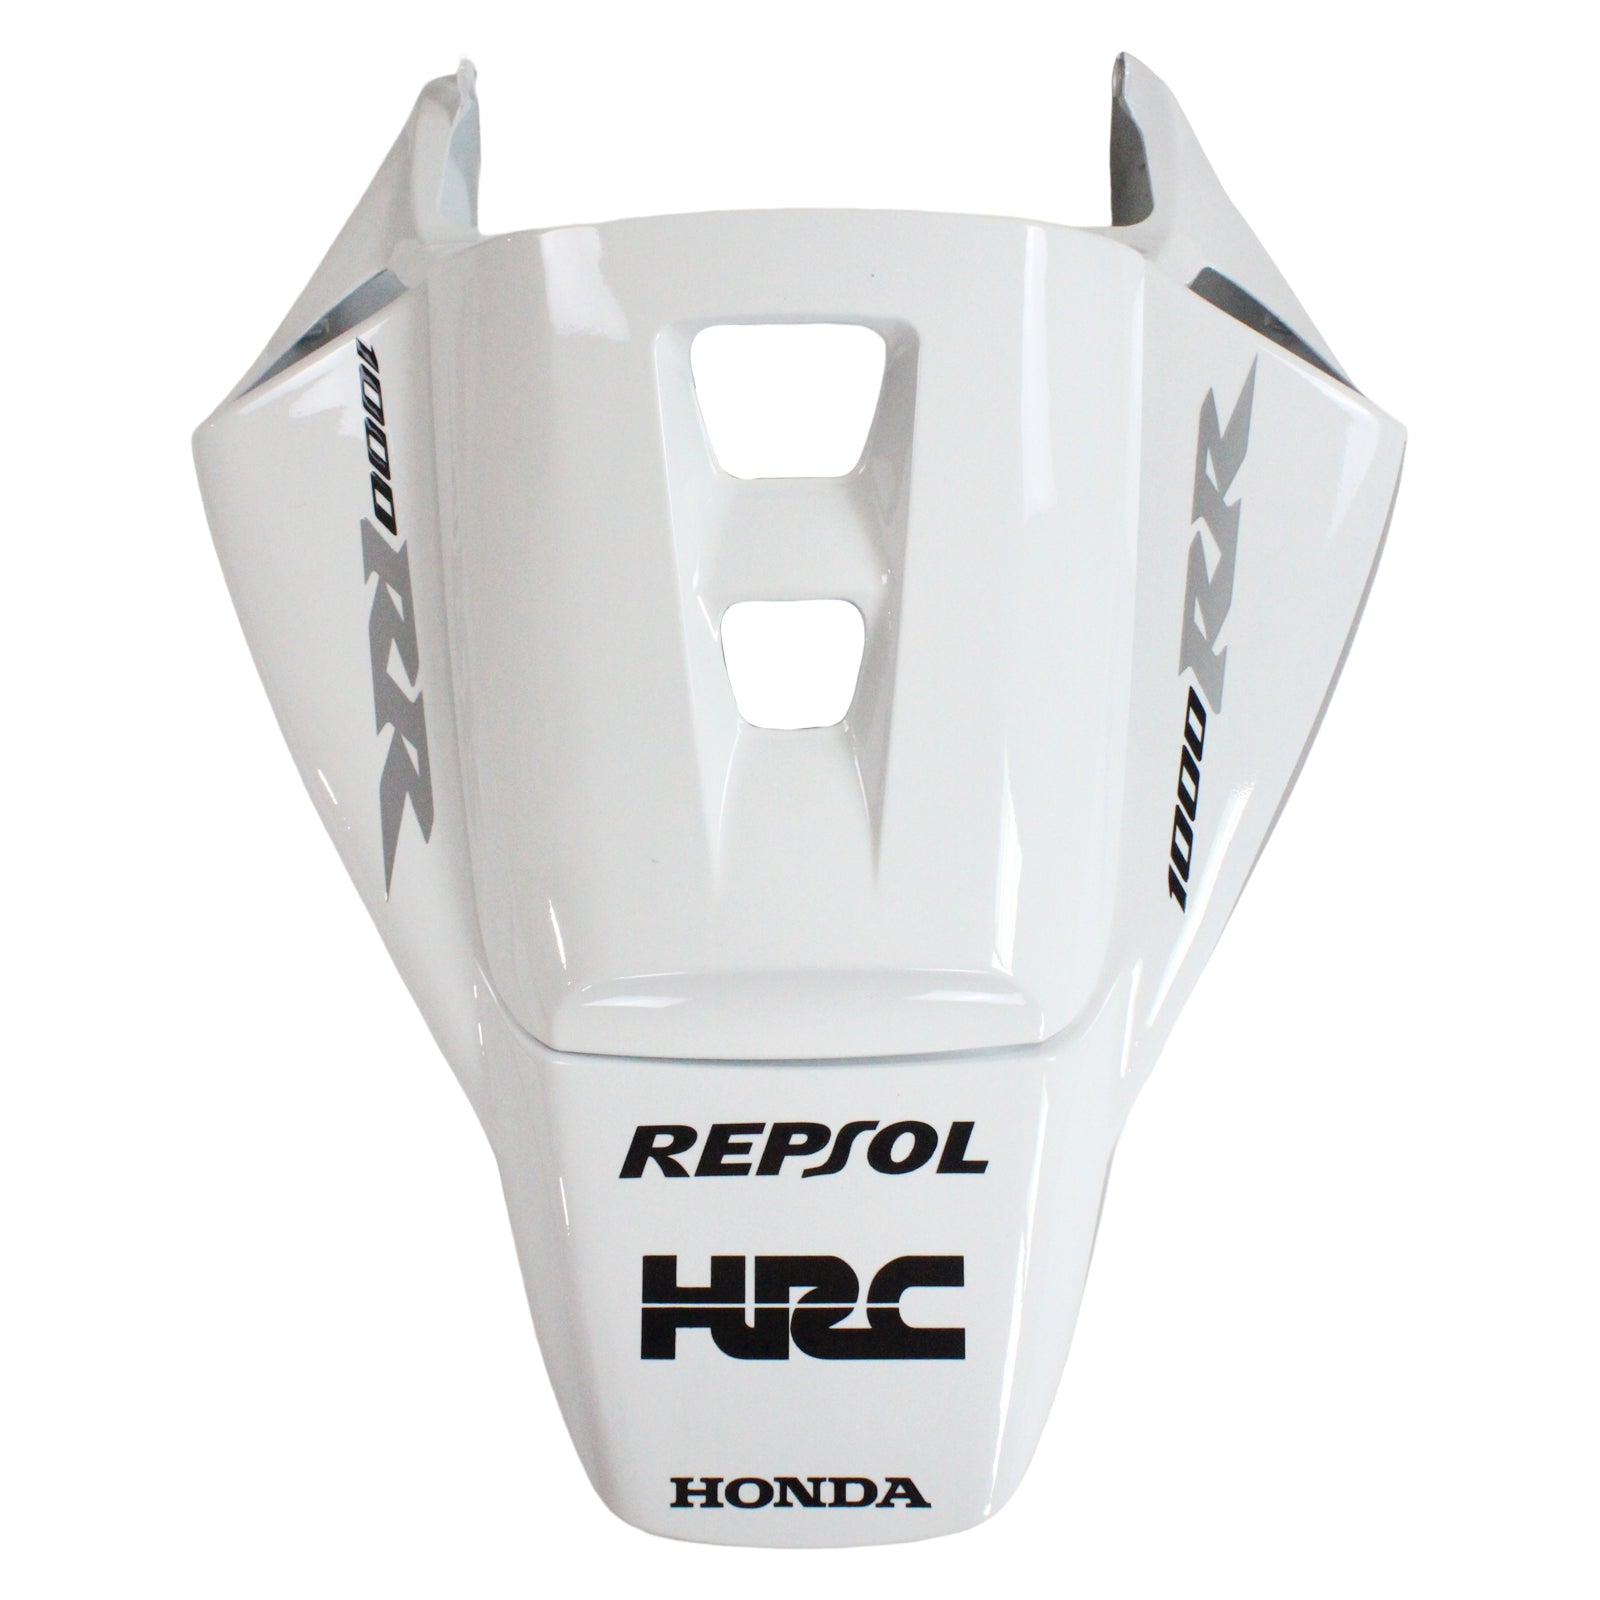 Amotopart Fairings Honda CBR1000RR 2006-2007 Fairing White & Silver Repsol Racing Fairing Kit